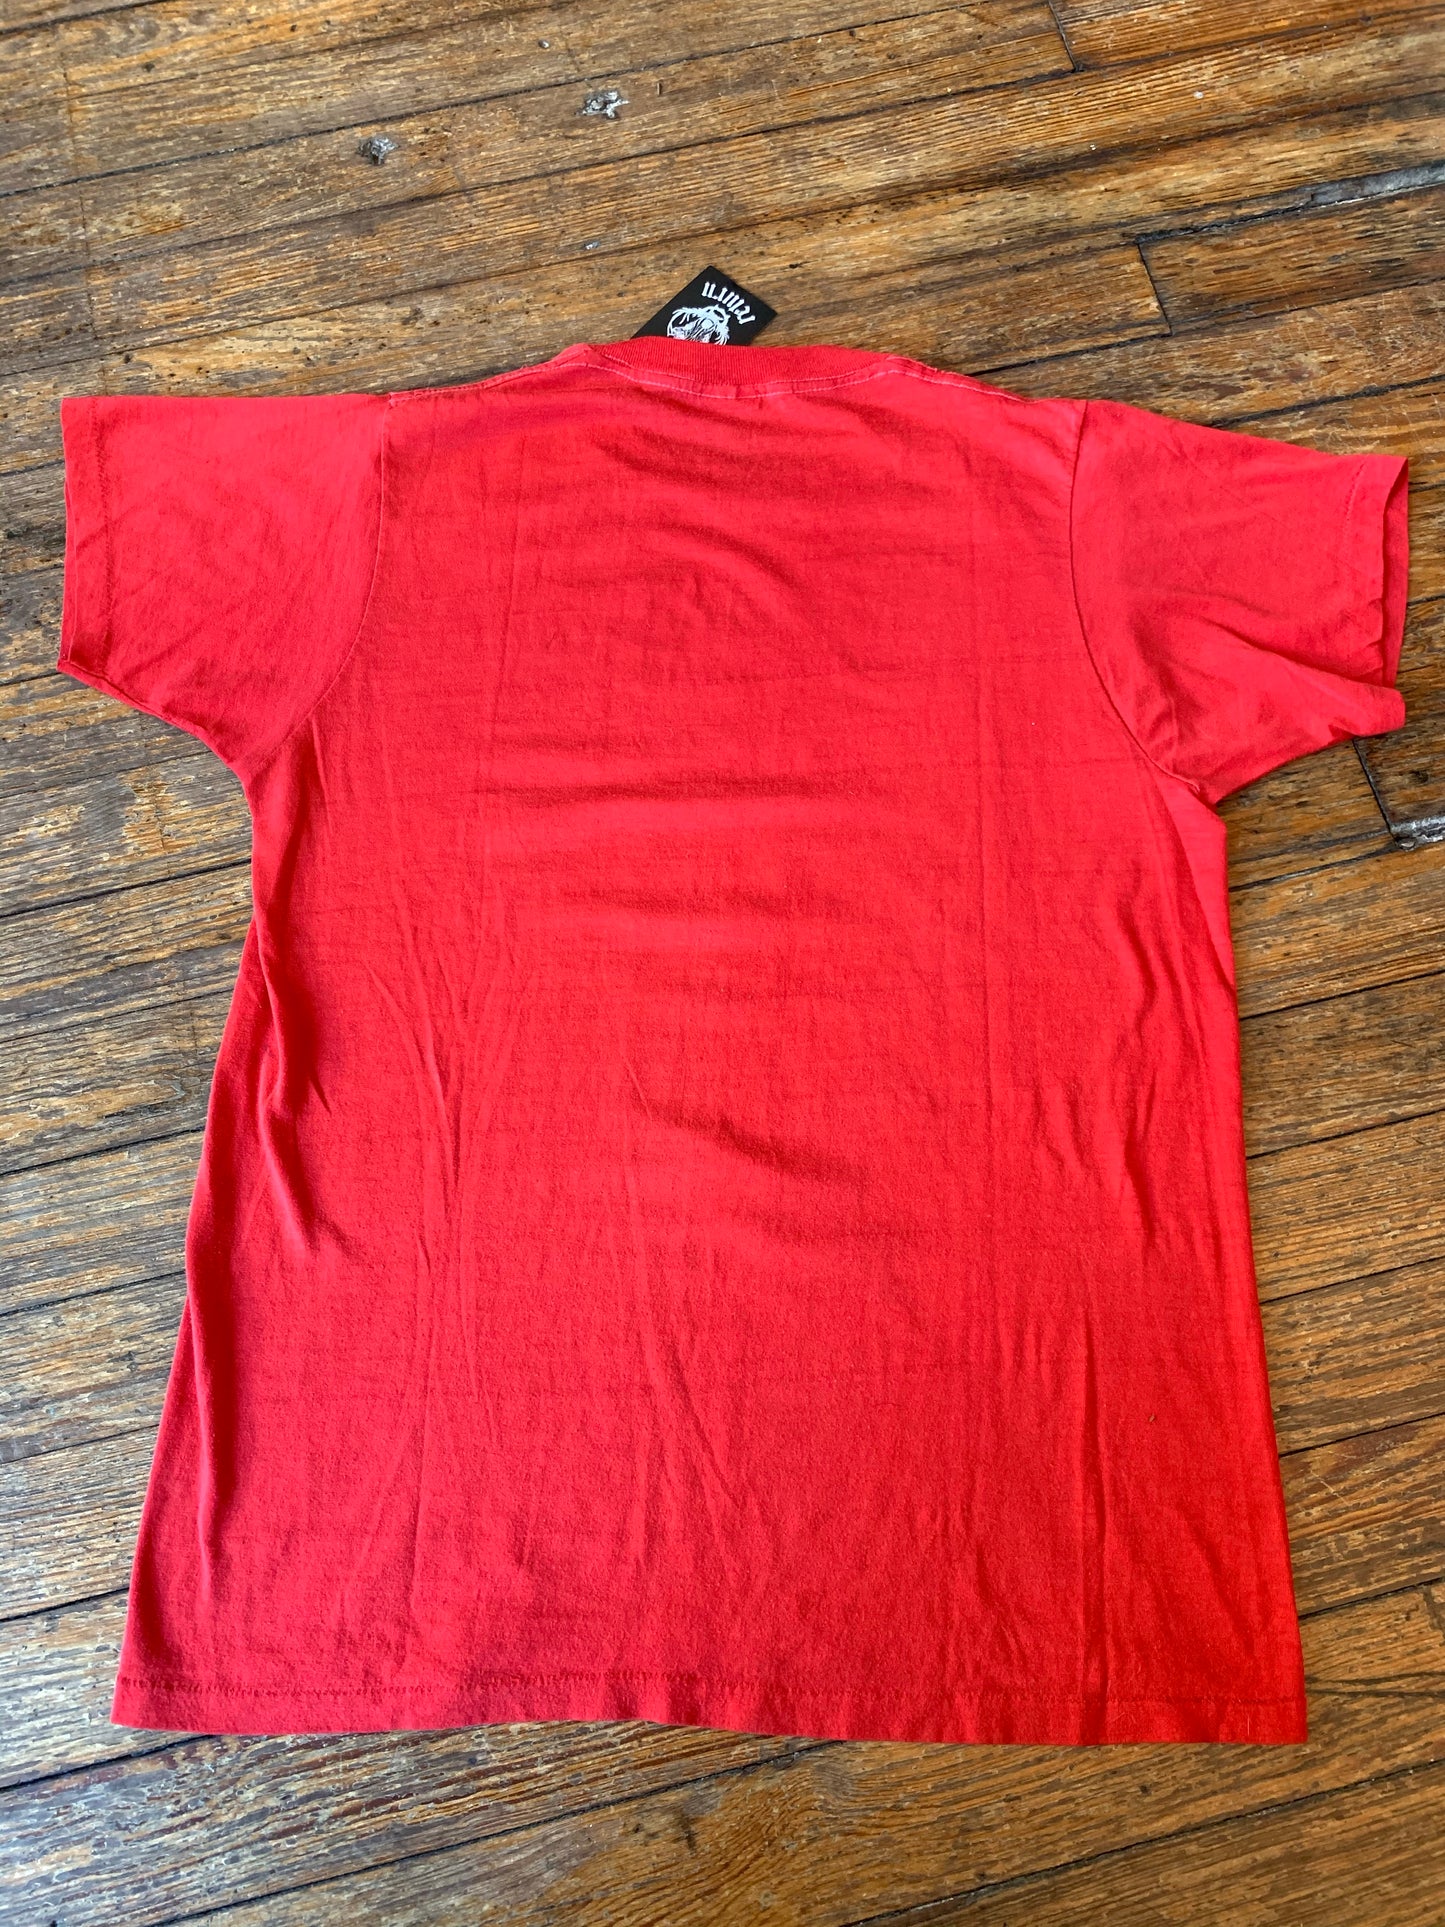 Vintage 80’s Bull Run Street Rods Inc. T-Shirt